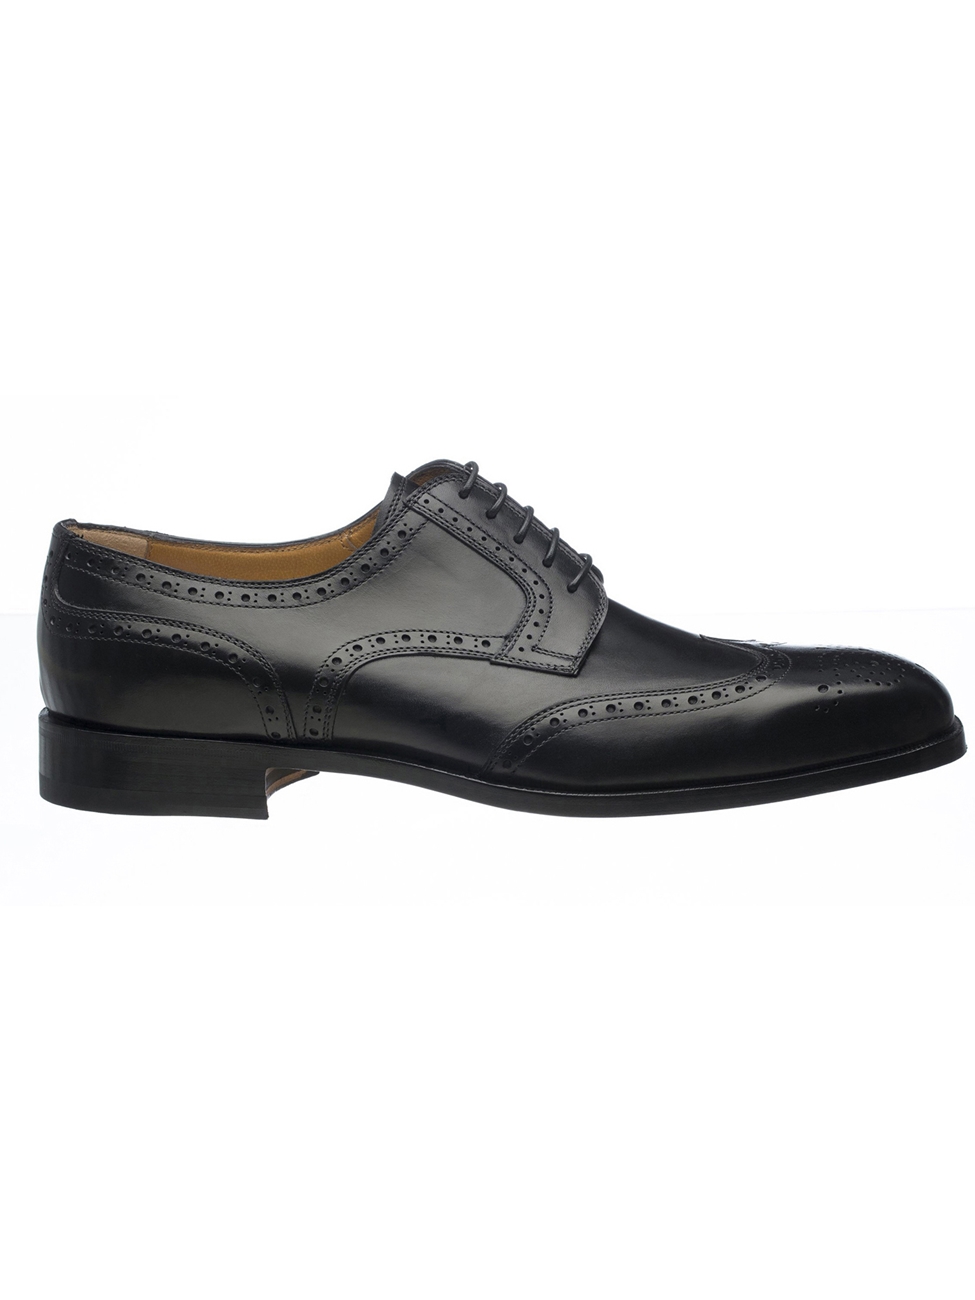 Black French Calf Leather Mens Dress Shoe | Ferrini Dress Shoes | Sam's ...